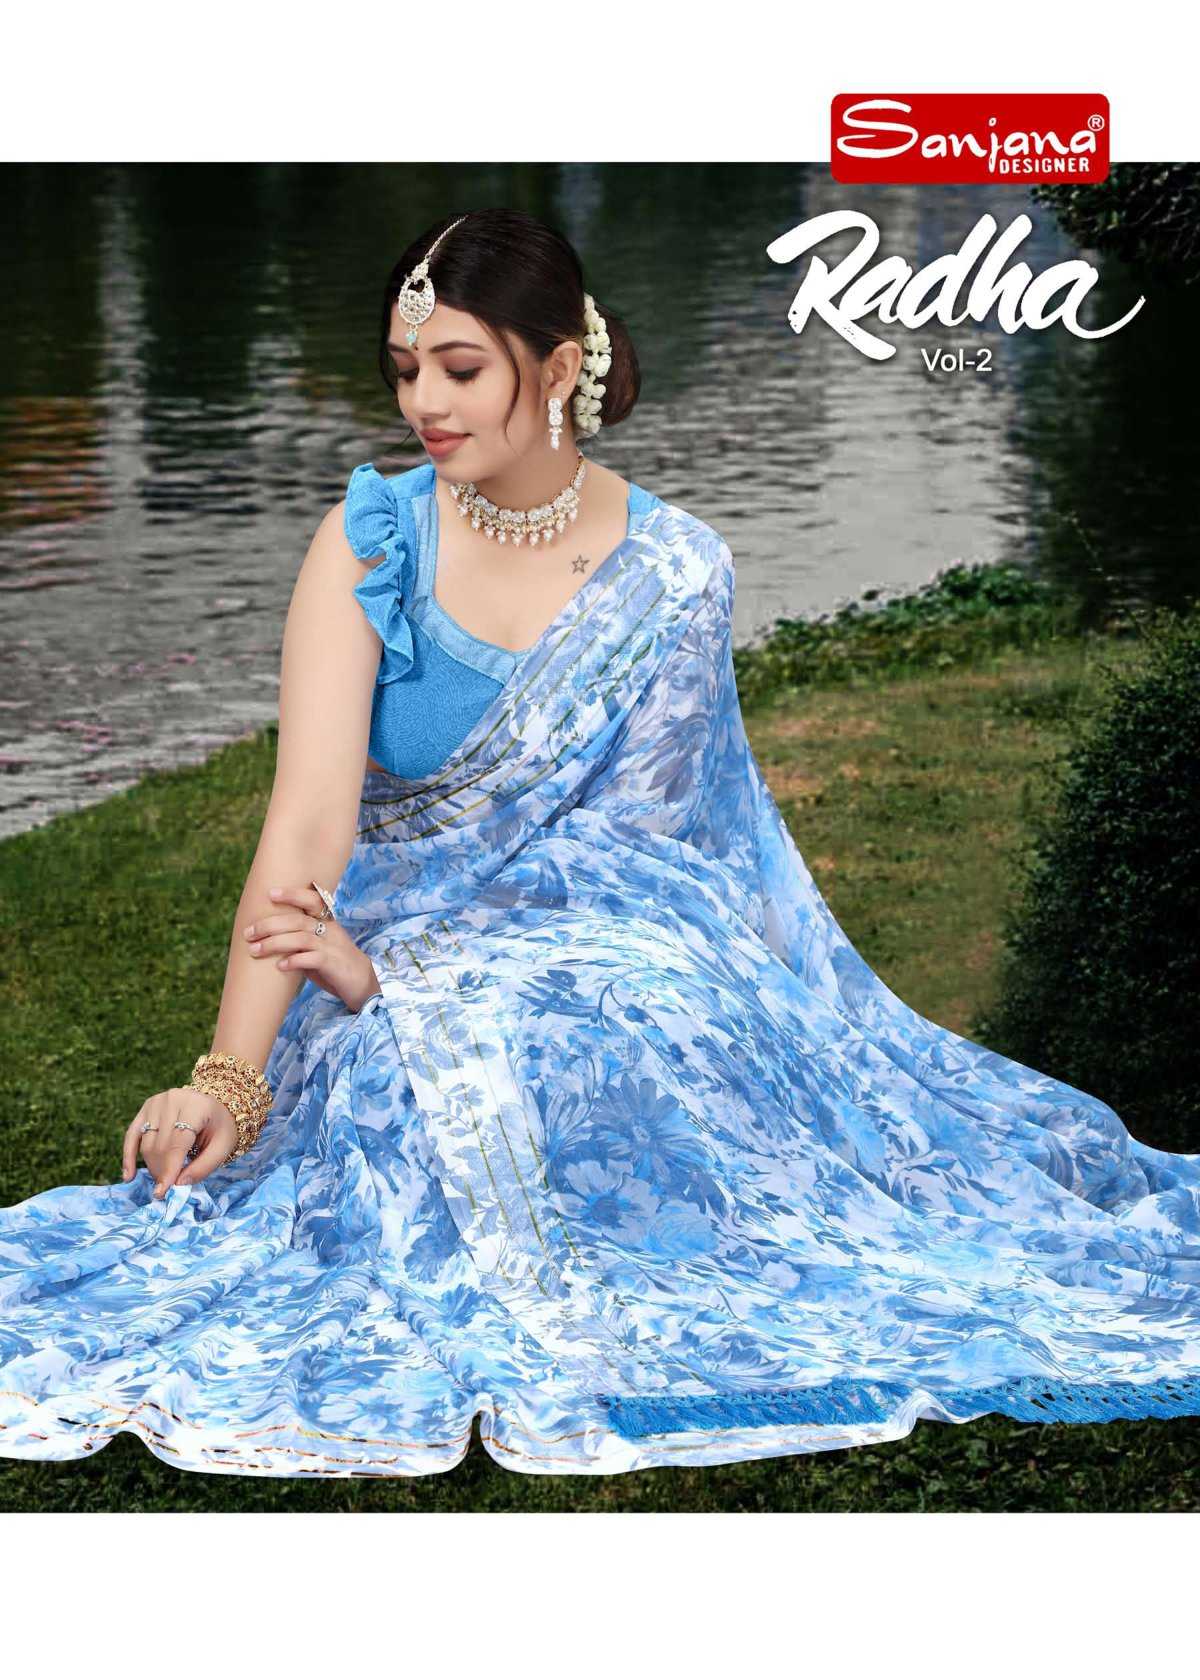 radha vol 2 by sanjana designer fancy weightless jacquard border sarees catalog